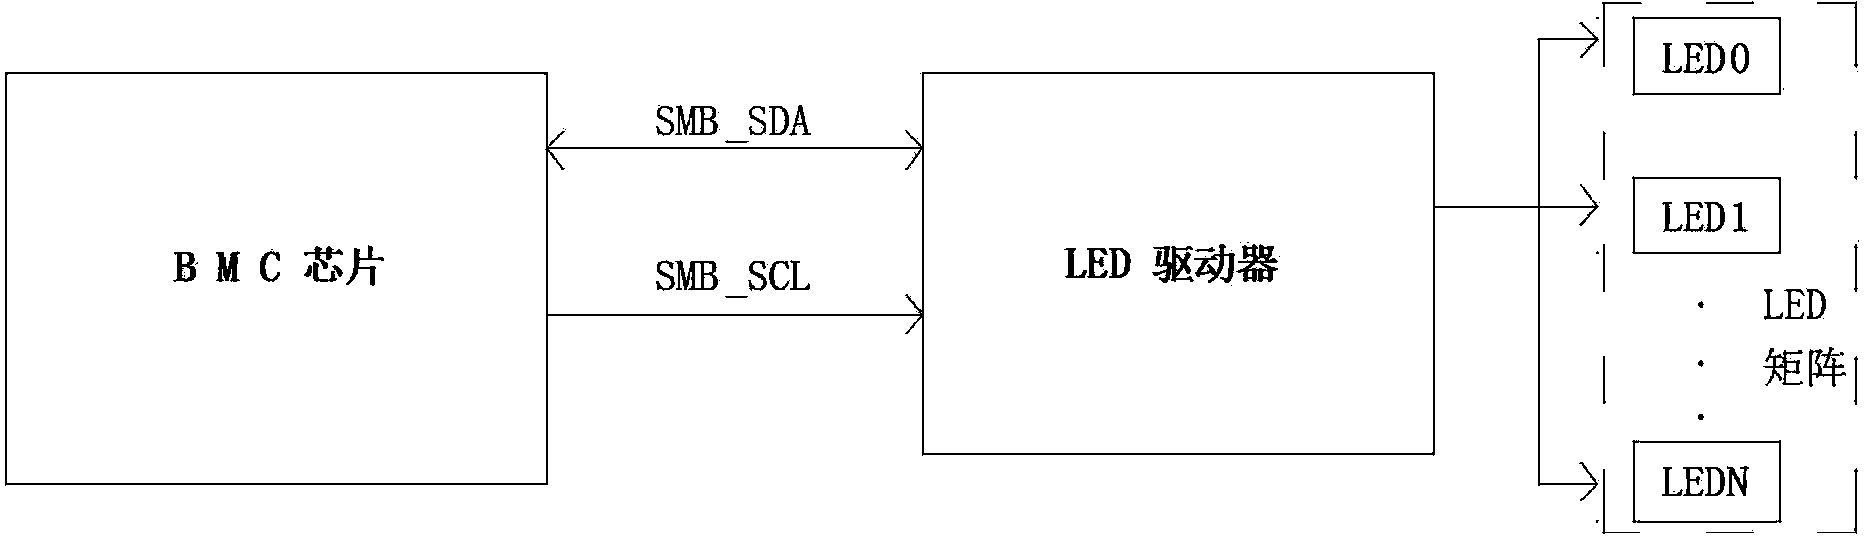 Light path diagnosing method based on NUMA computer architecture